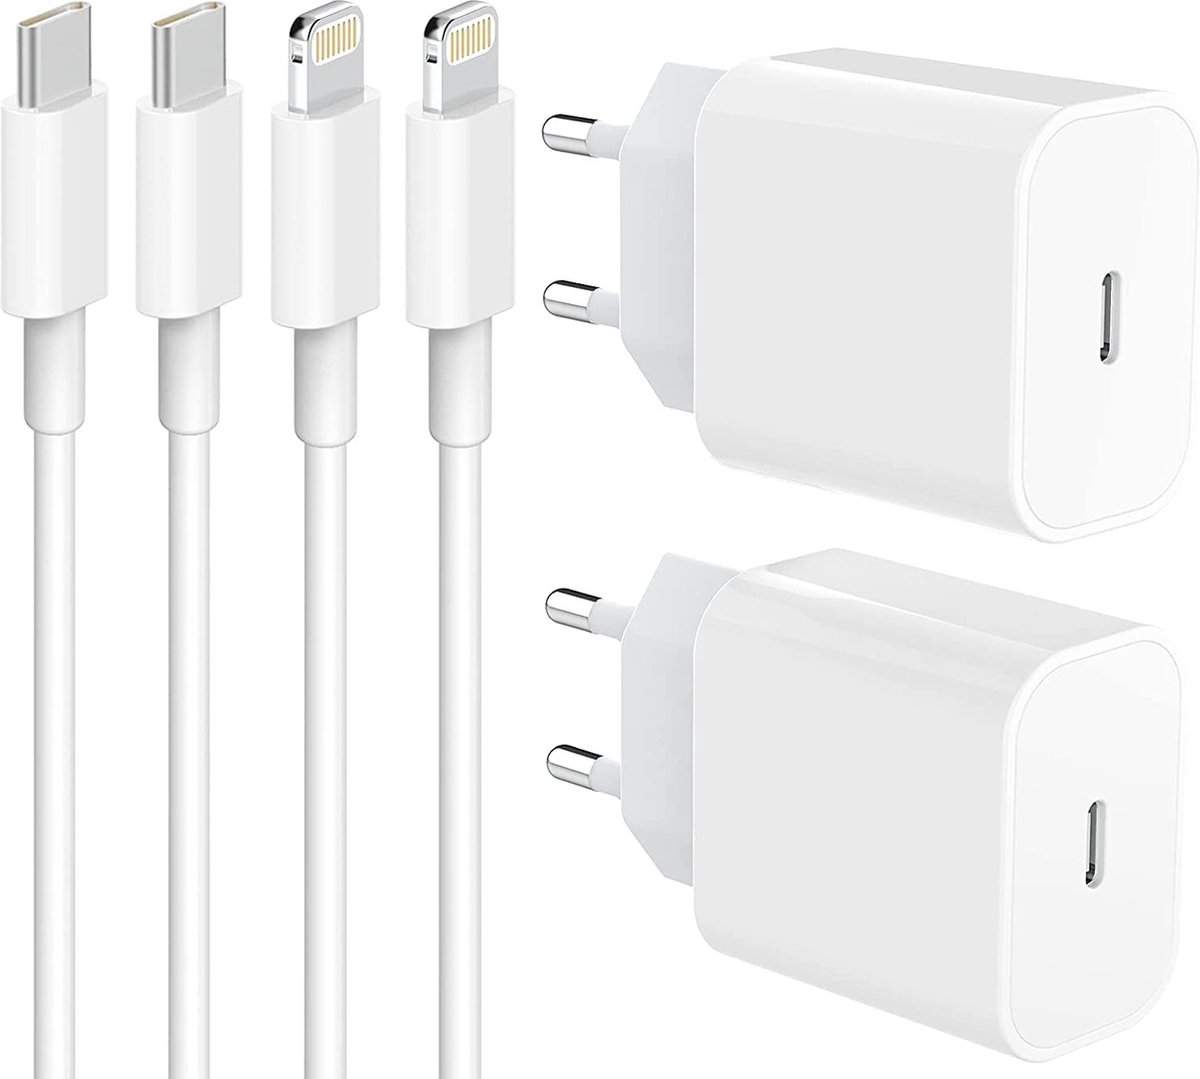 Câble USB-C vers Lightning Original Apple (1m) Charge Rapide iPhone - Blanc  - Français